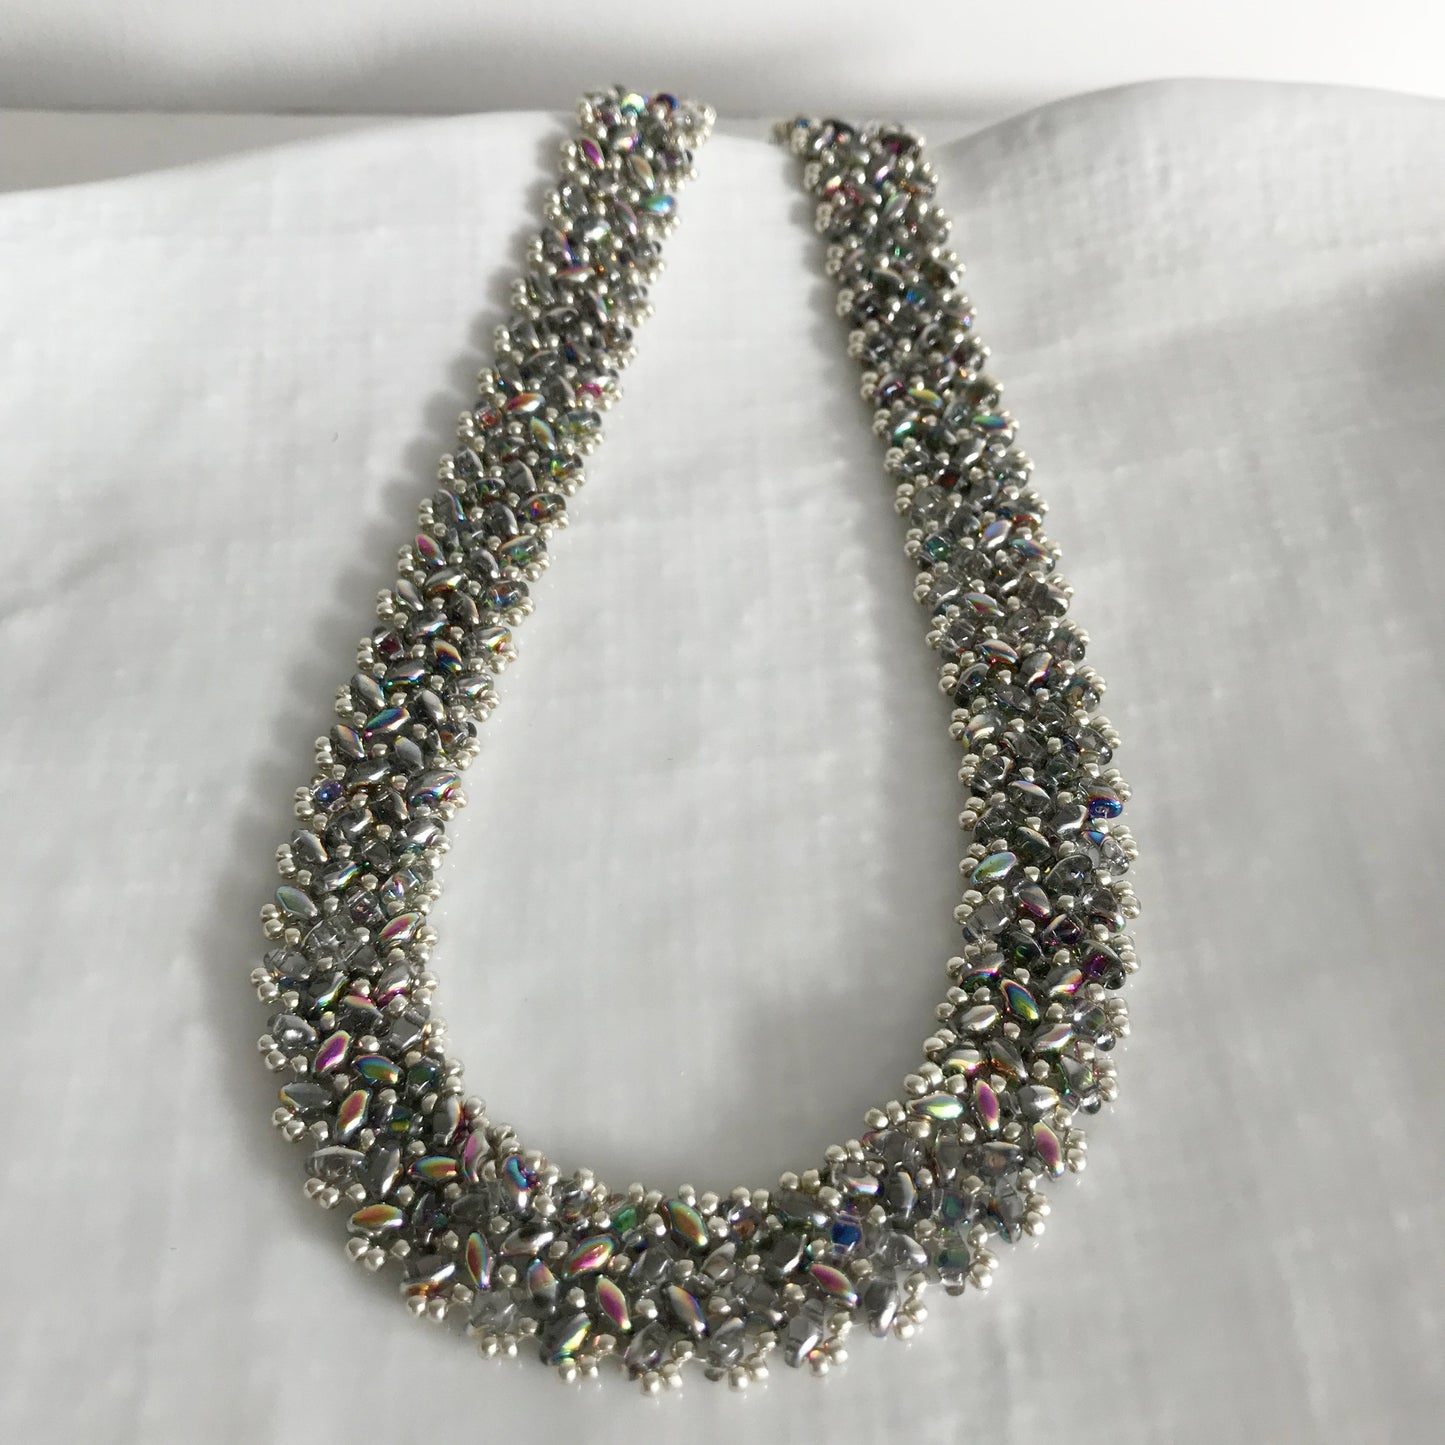 Crystal short necklaces/wrap bracelets